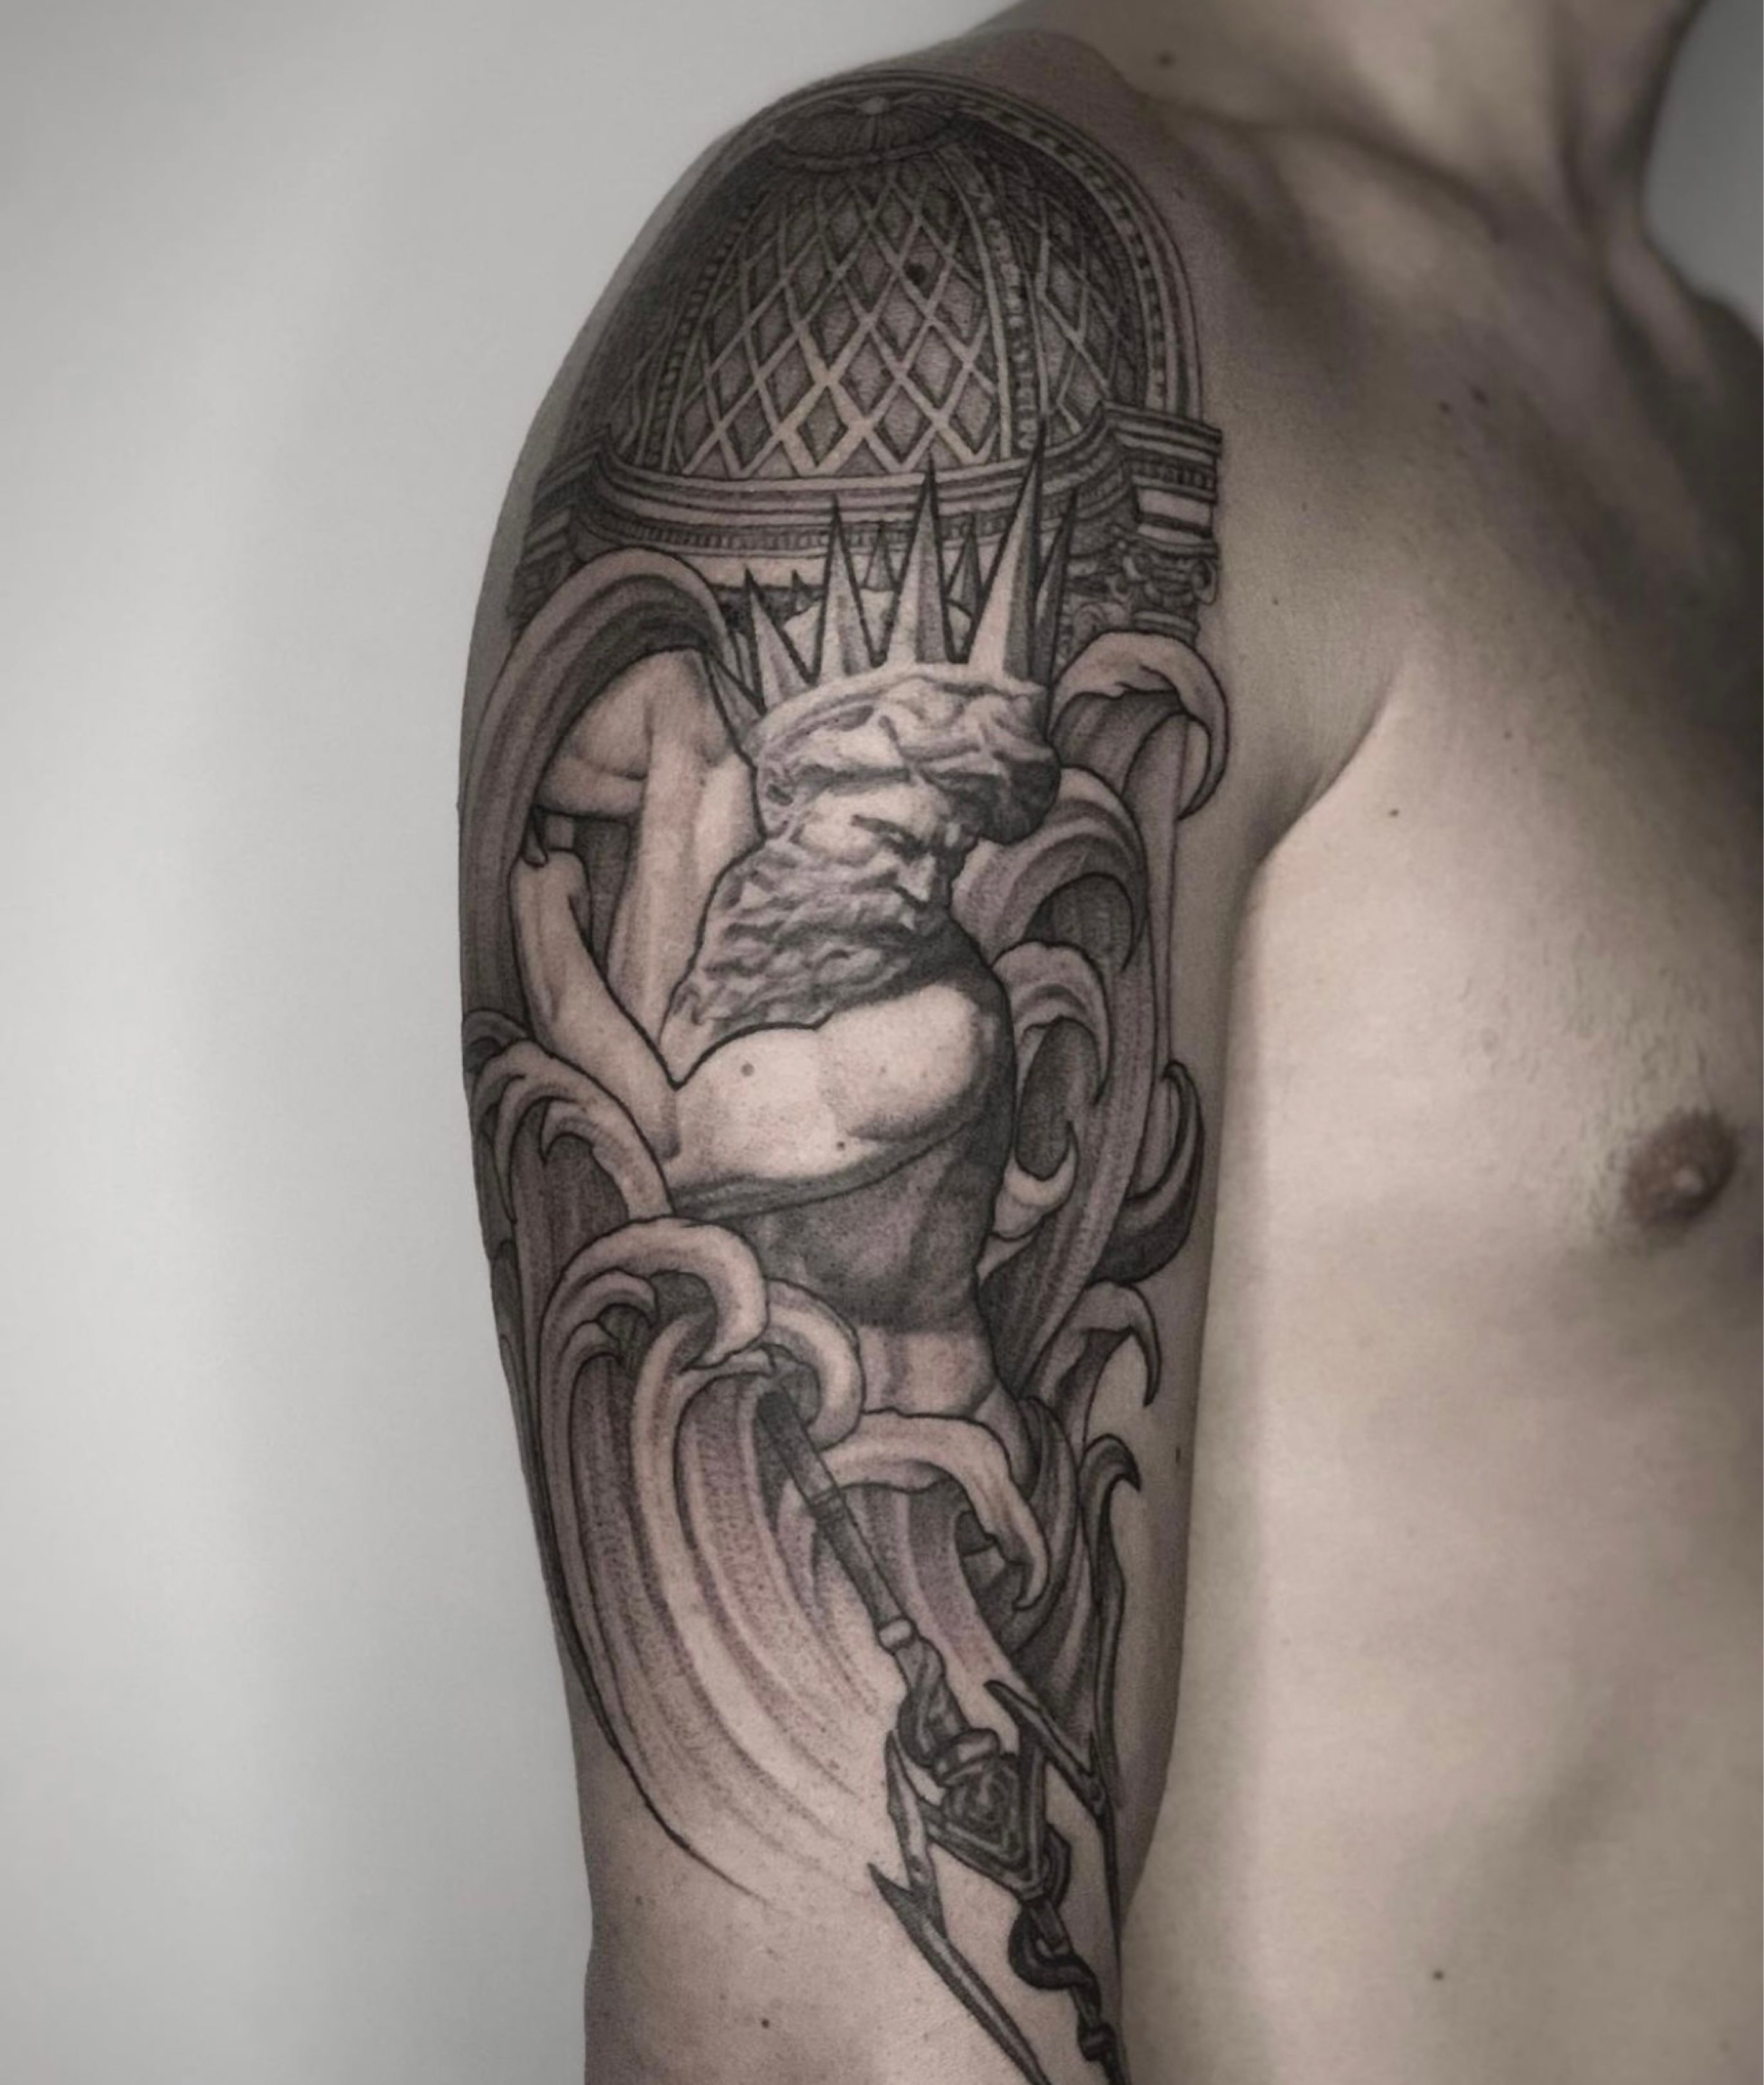 Norse mythology tattoo design Fenrir detail by Tattoo-Design on DeviantArt